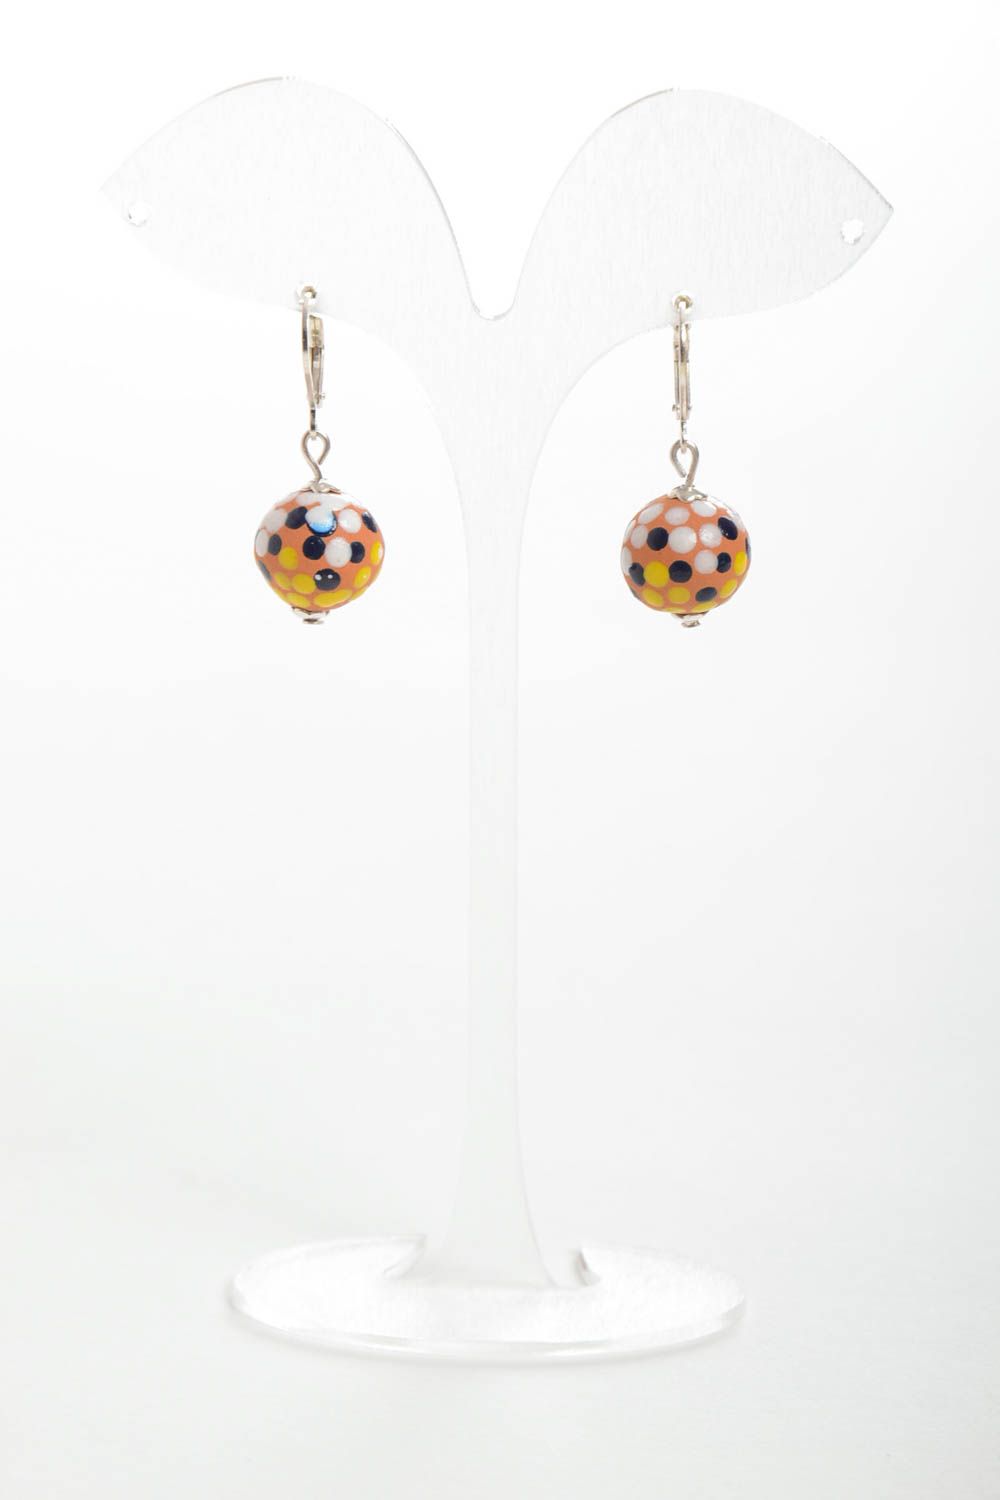 Unusual handmade clay earrings ceramic ball earrings designer earrings gift idea photo 2